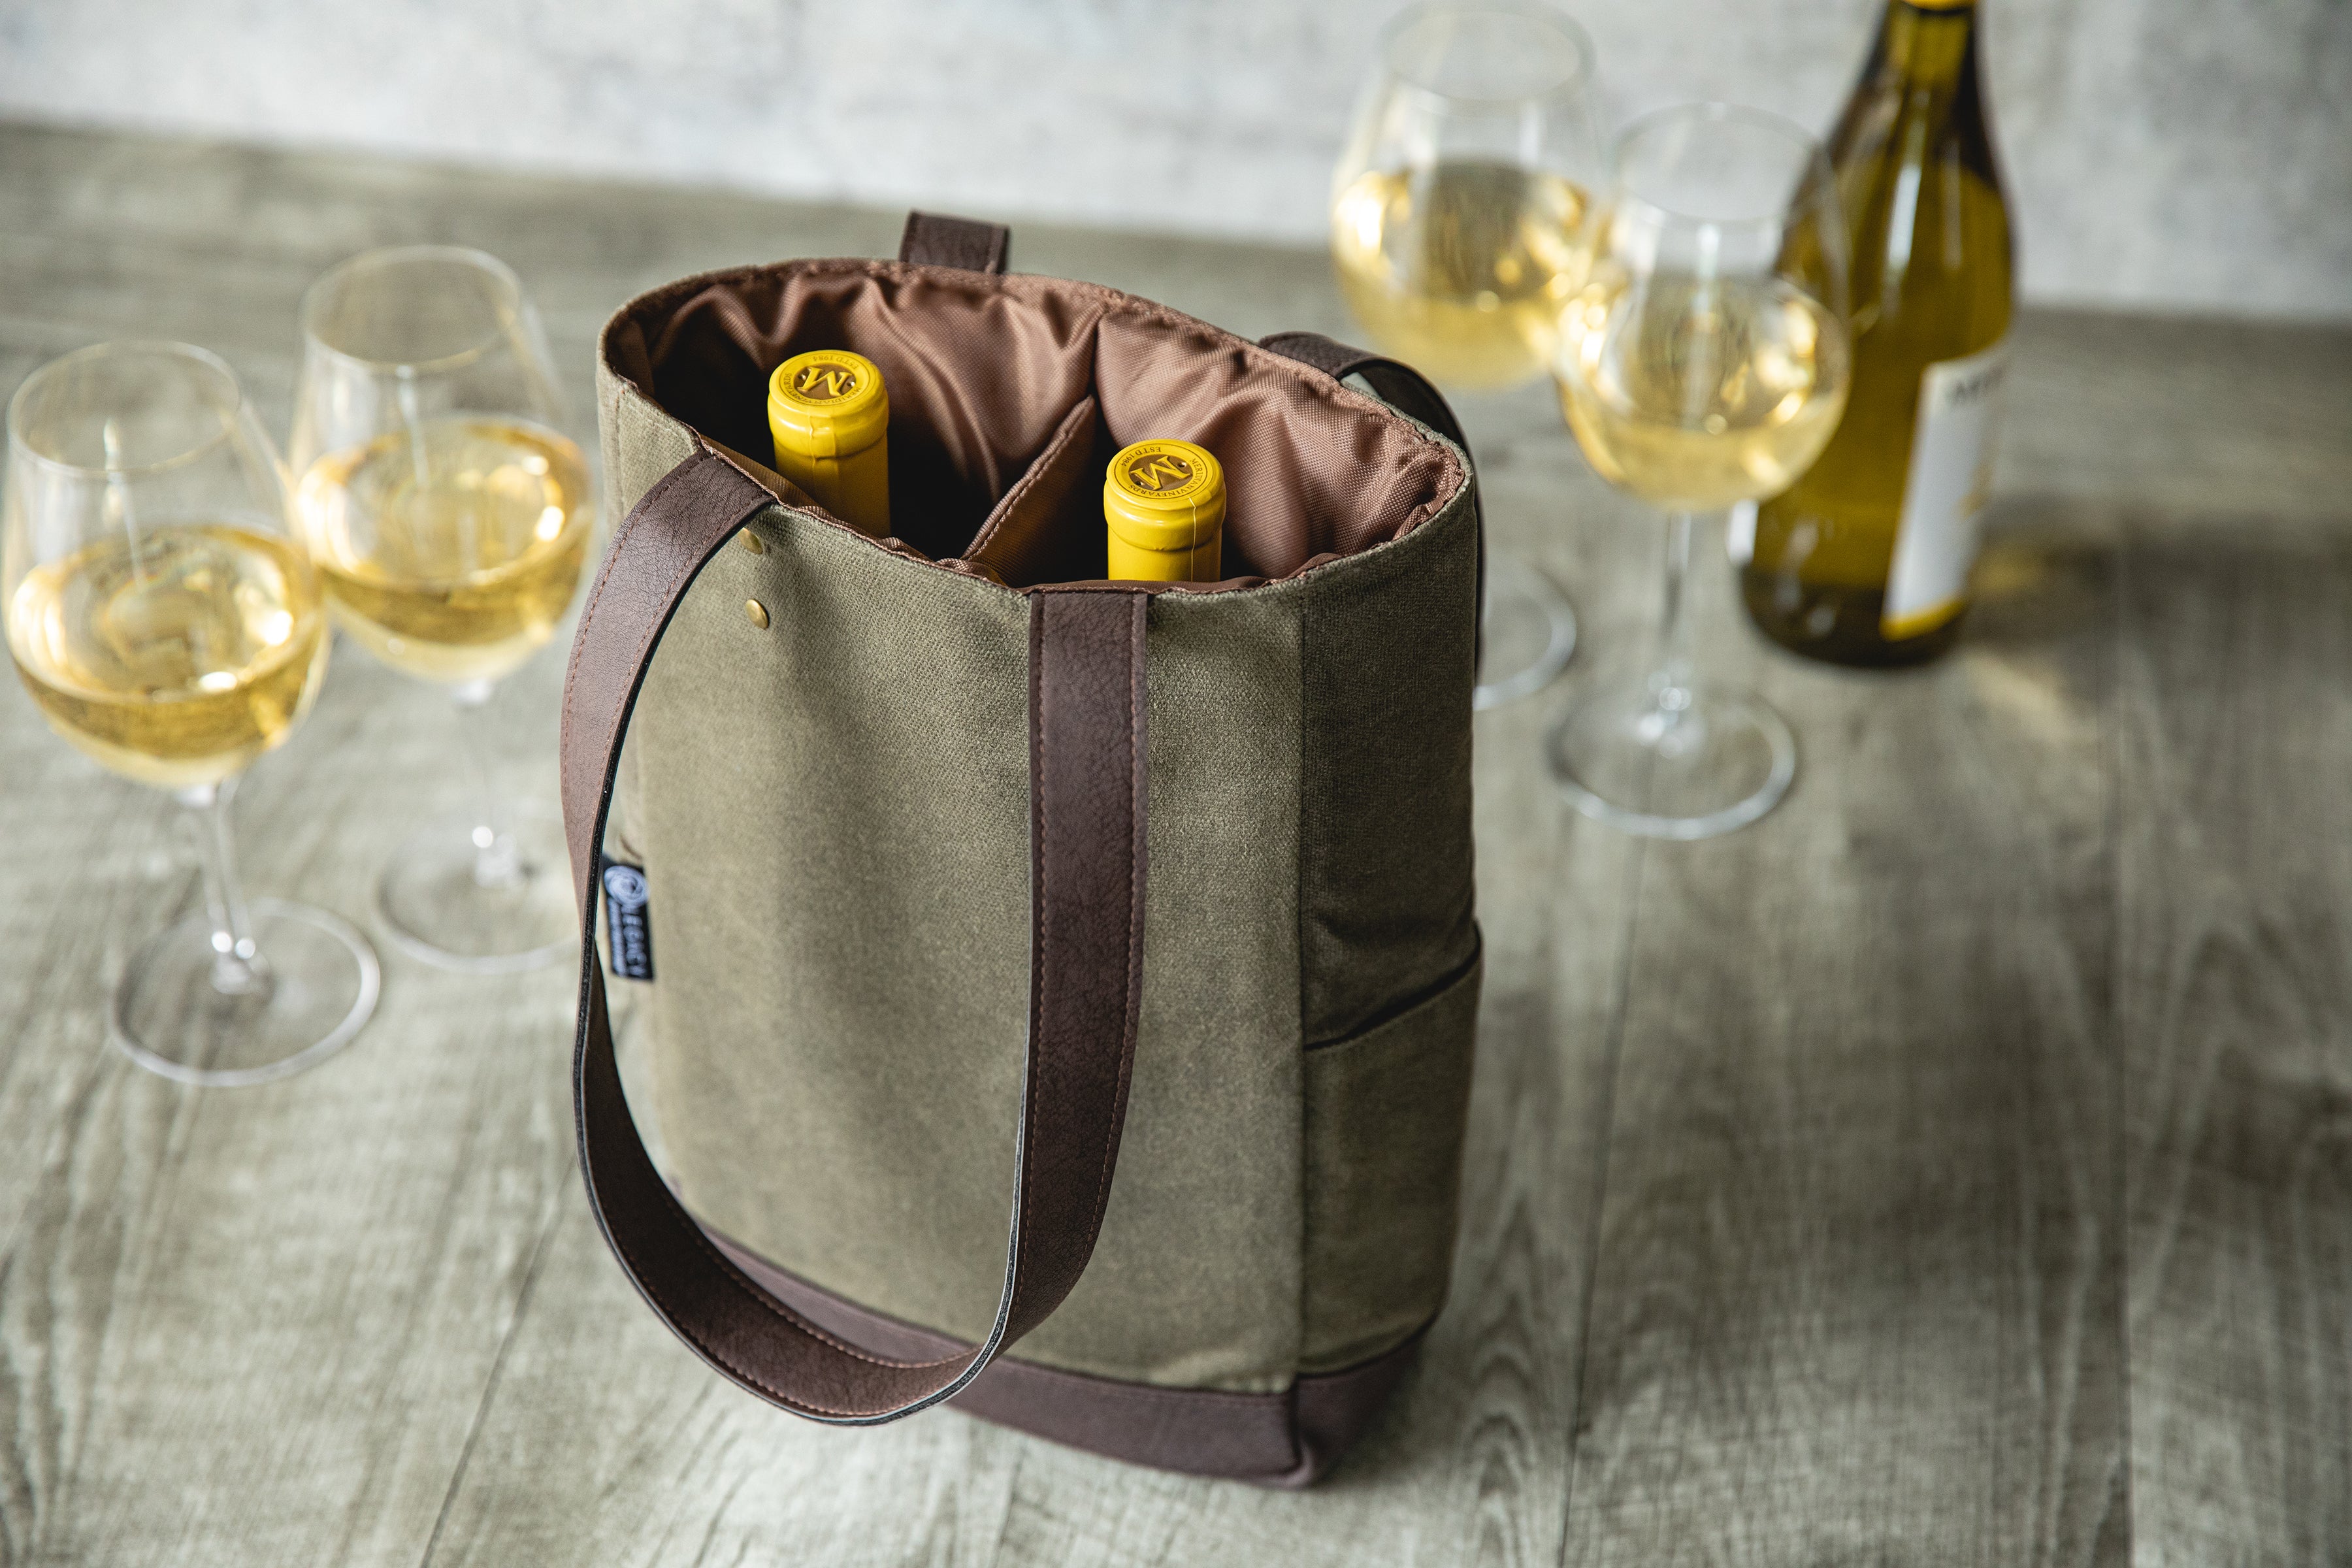 New York Yankees - 2 Bottle Insulated Wine Cooler Bag